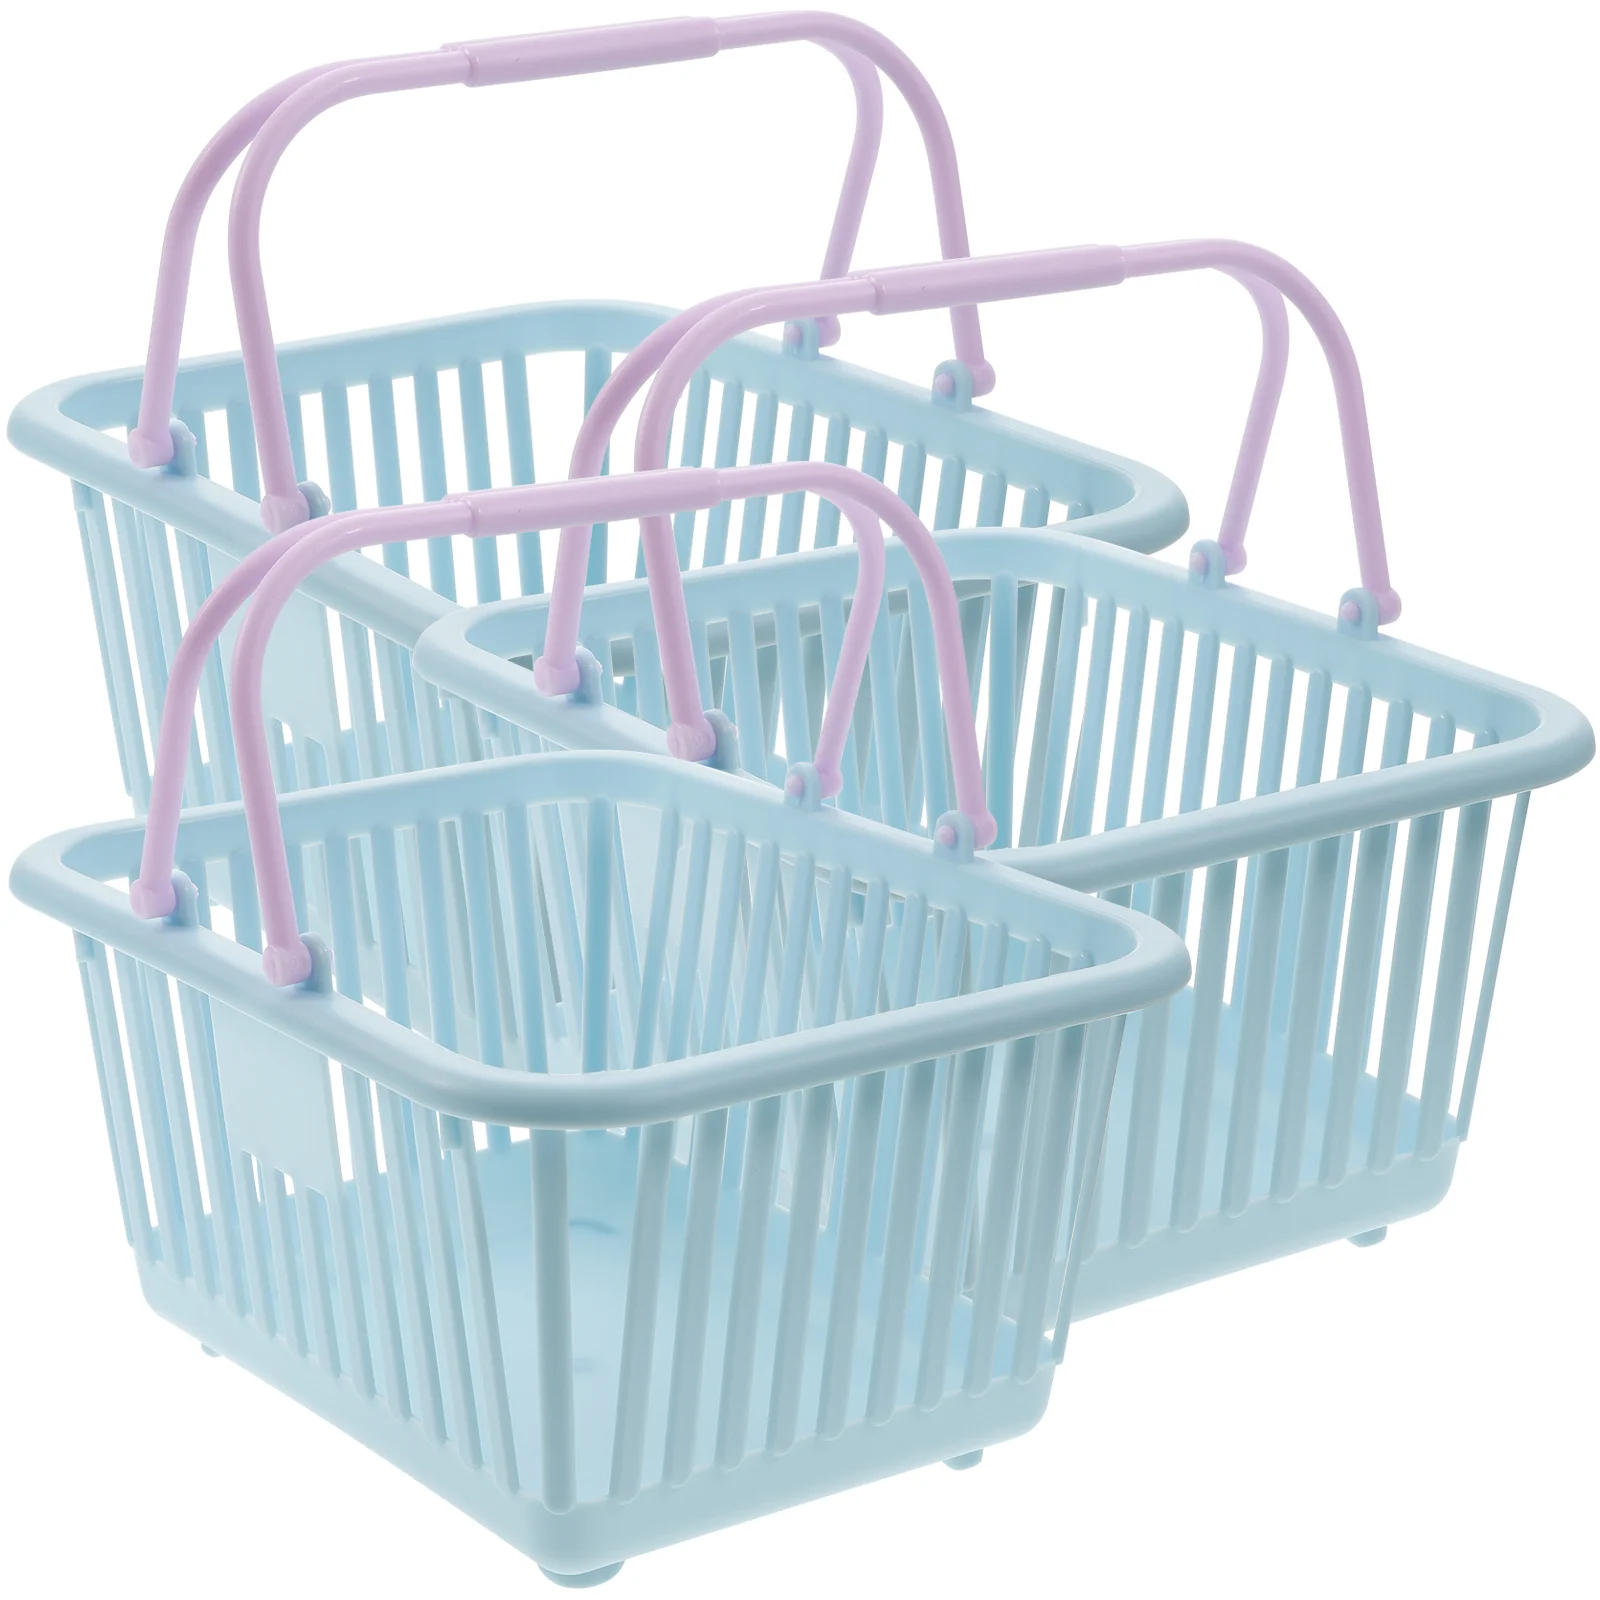 

3 Pcs Storage Basket Plastic Baskets Classroom Garden Small Bins Handles Strawberry Toy Buckets Kids Grocery